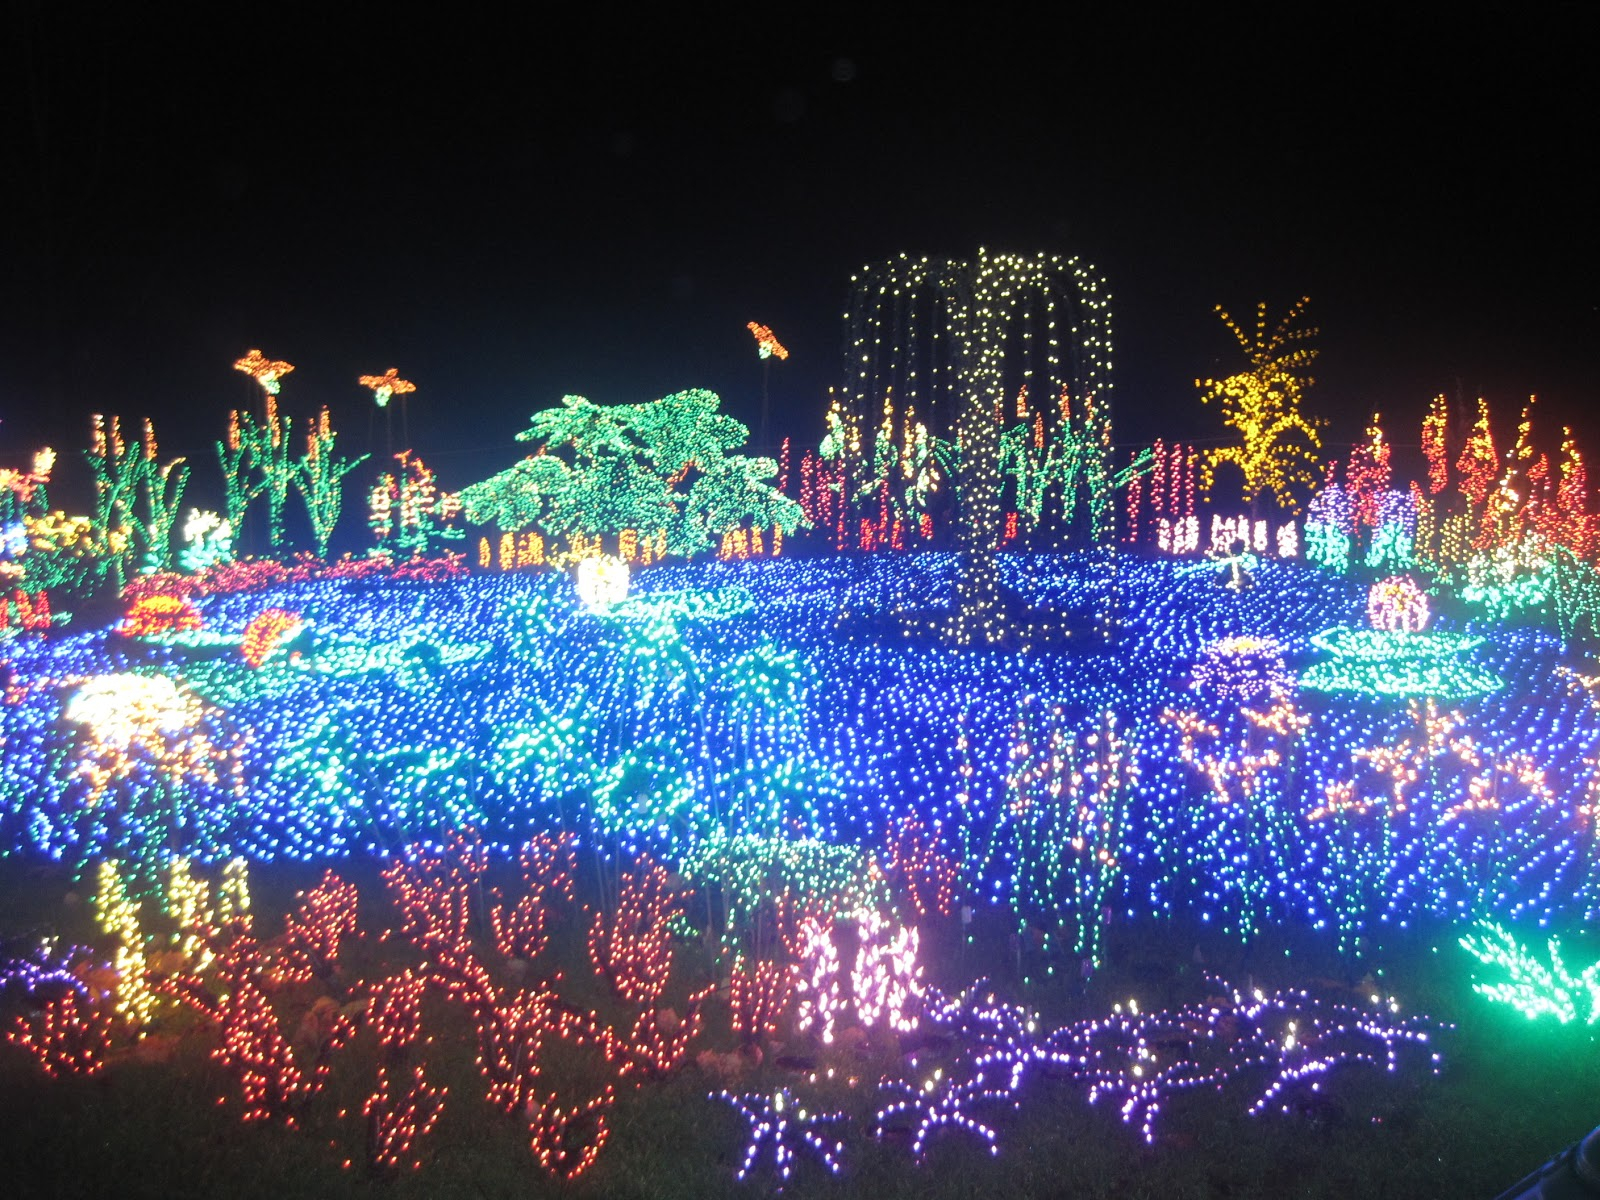 Mason Manor Botanical Garden Christmas Lights